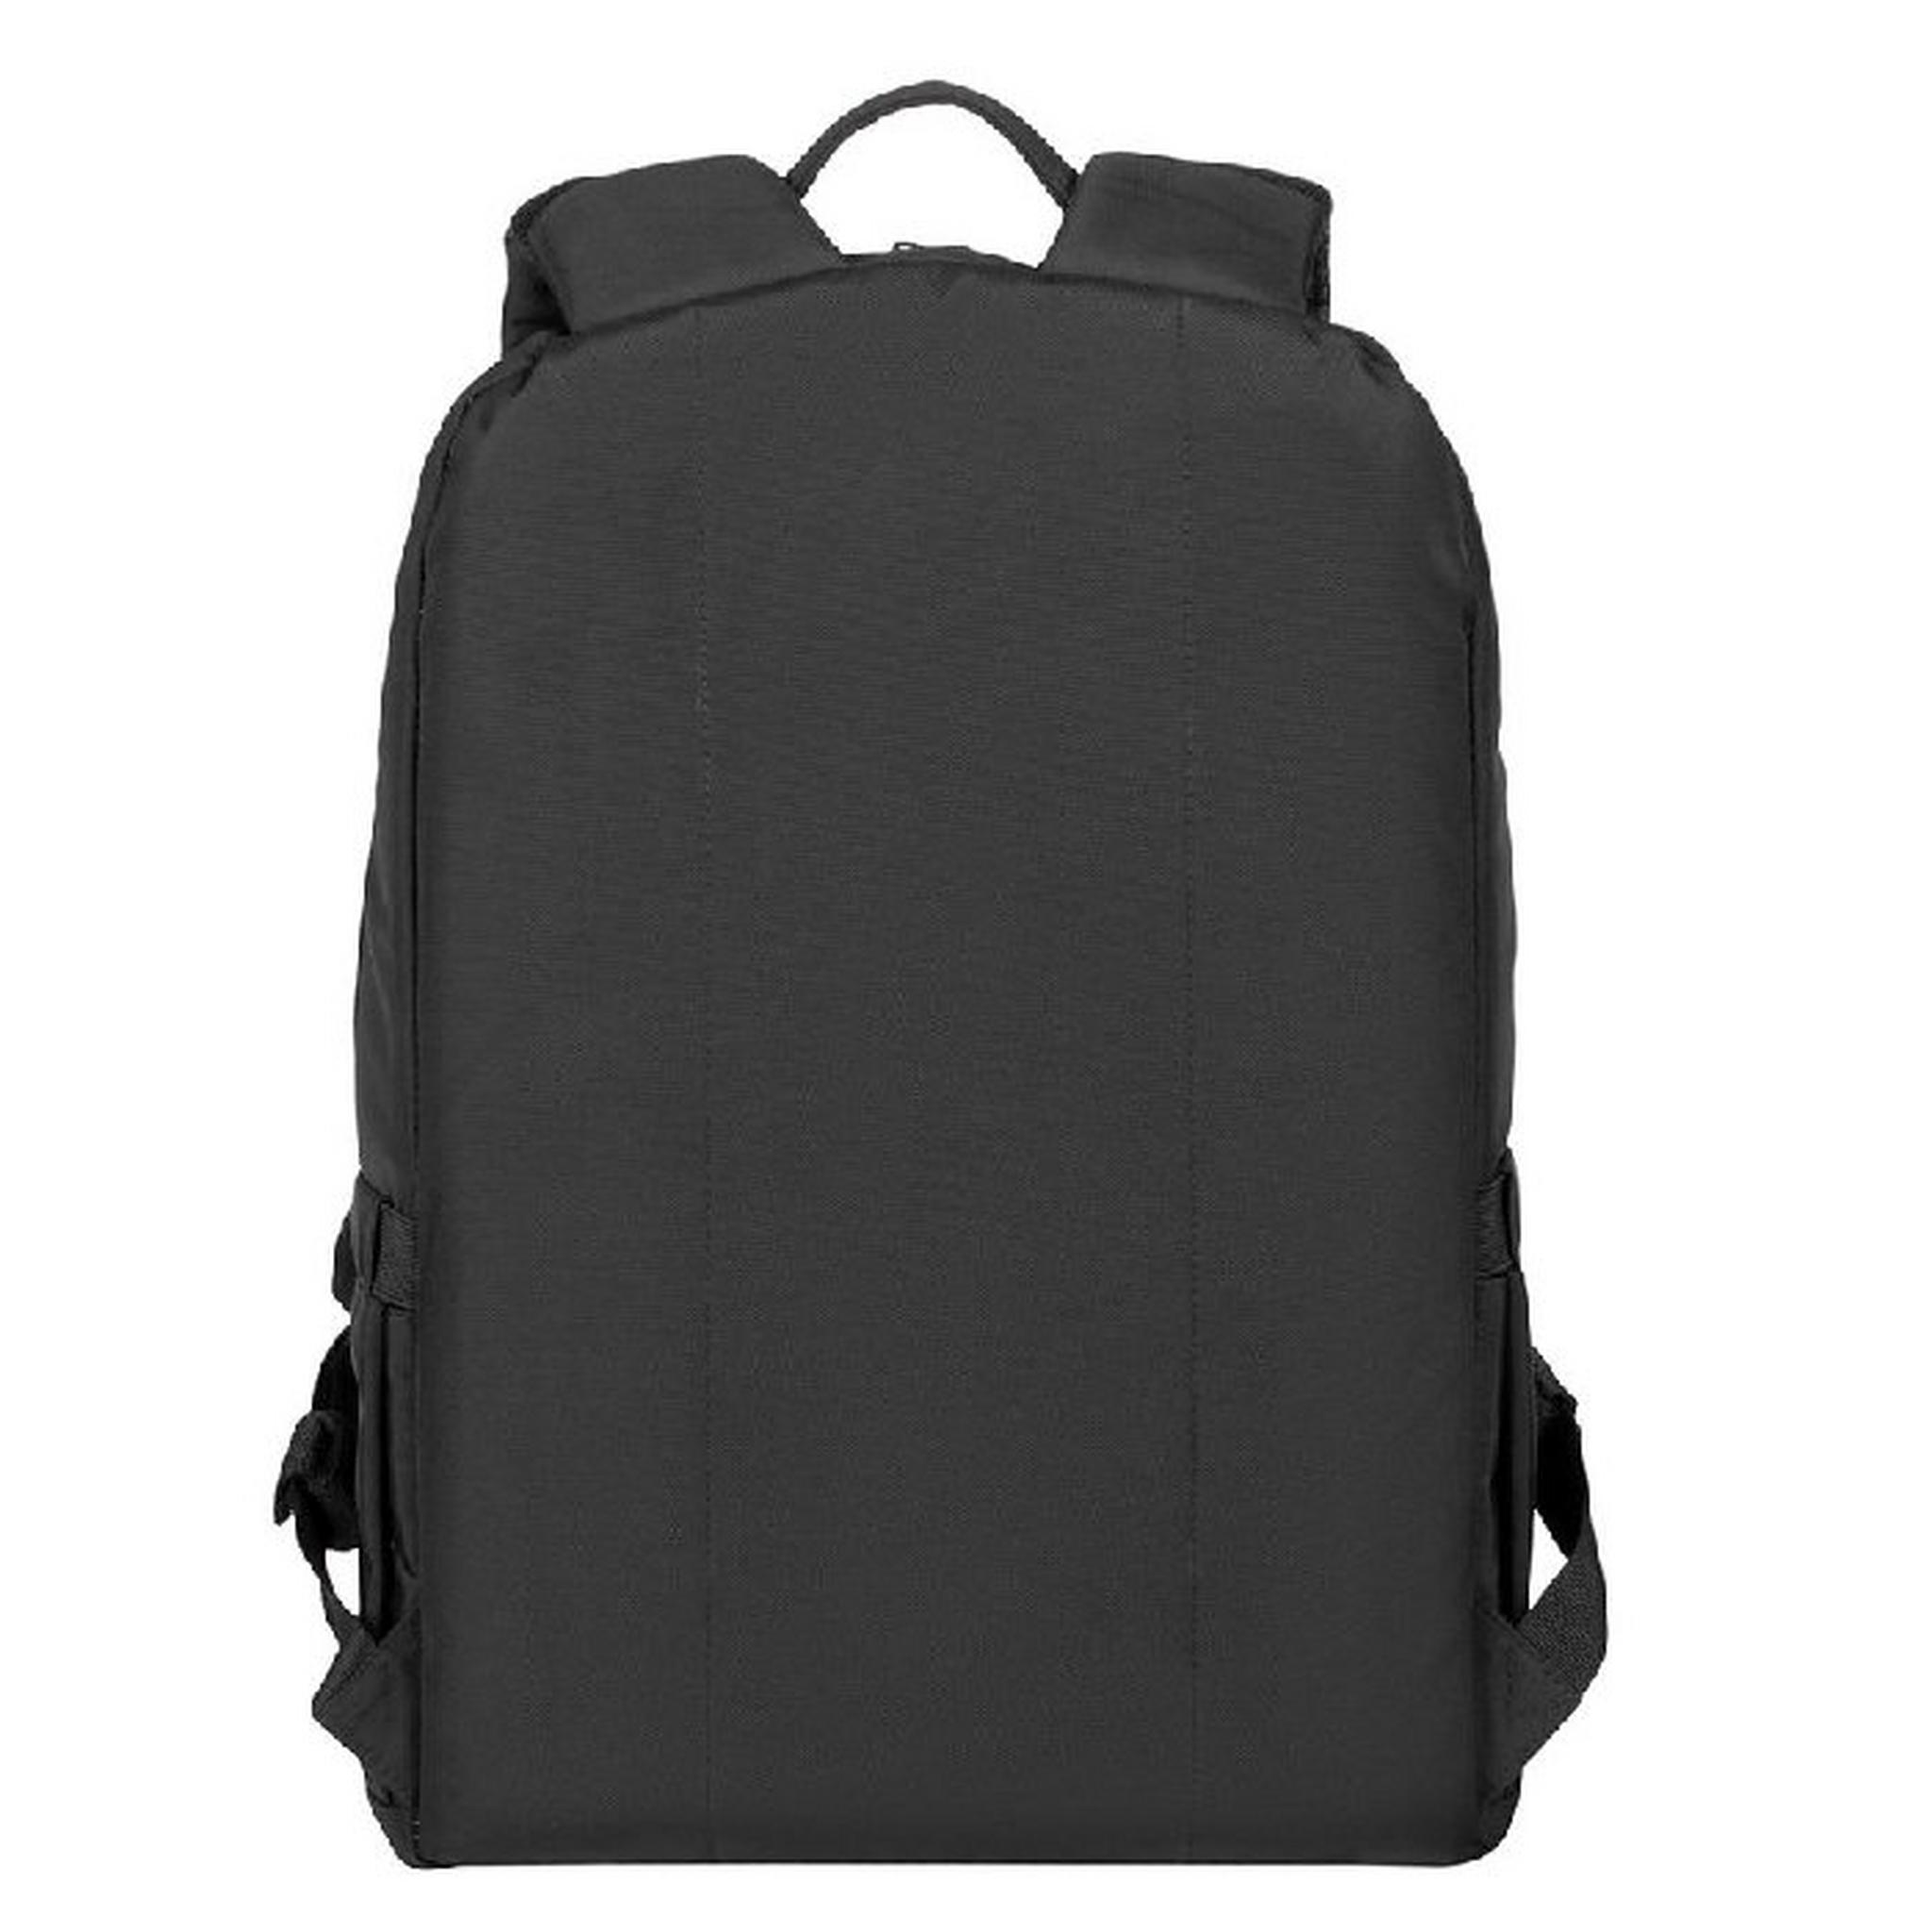 Riva Case Alpendorf ECO Laptop Backpack, 15.6-16 inch, 7561 - Black